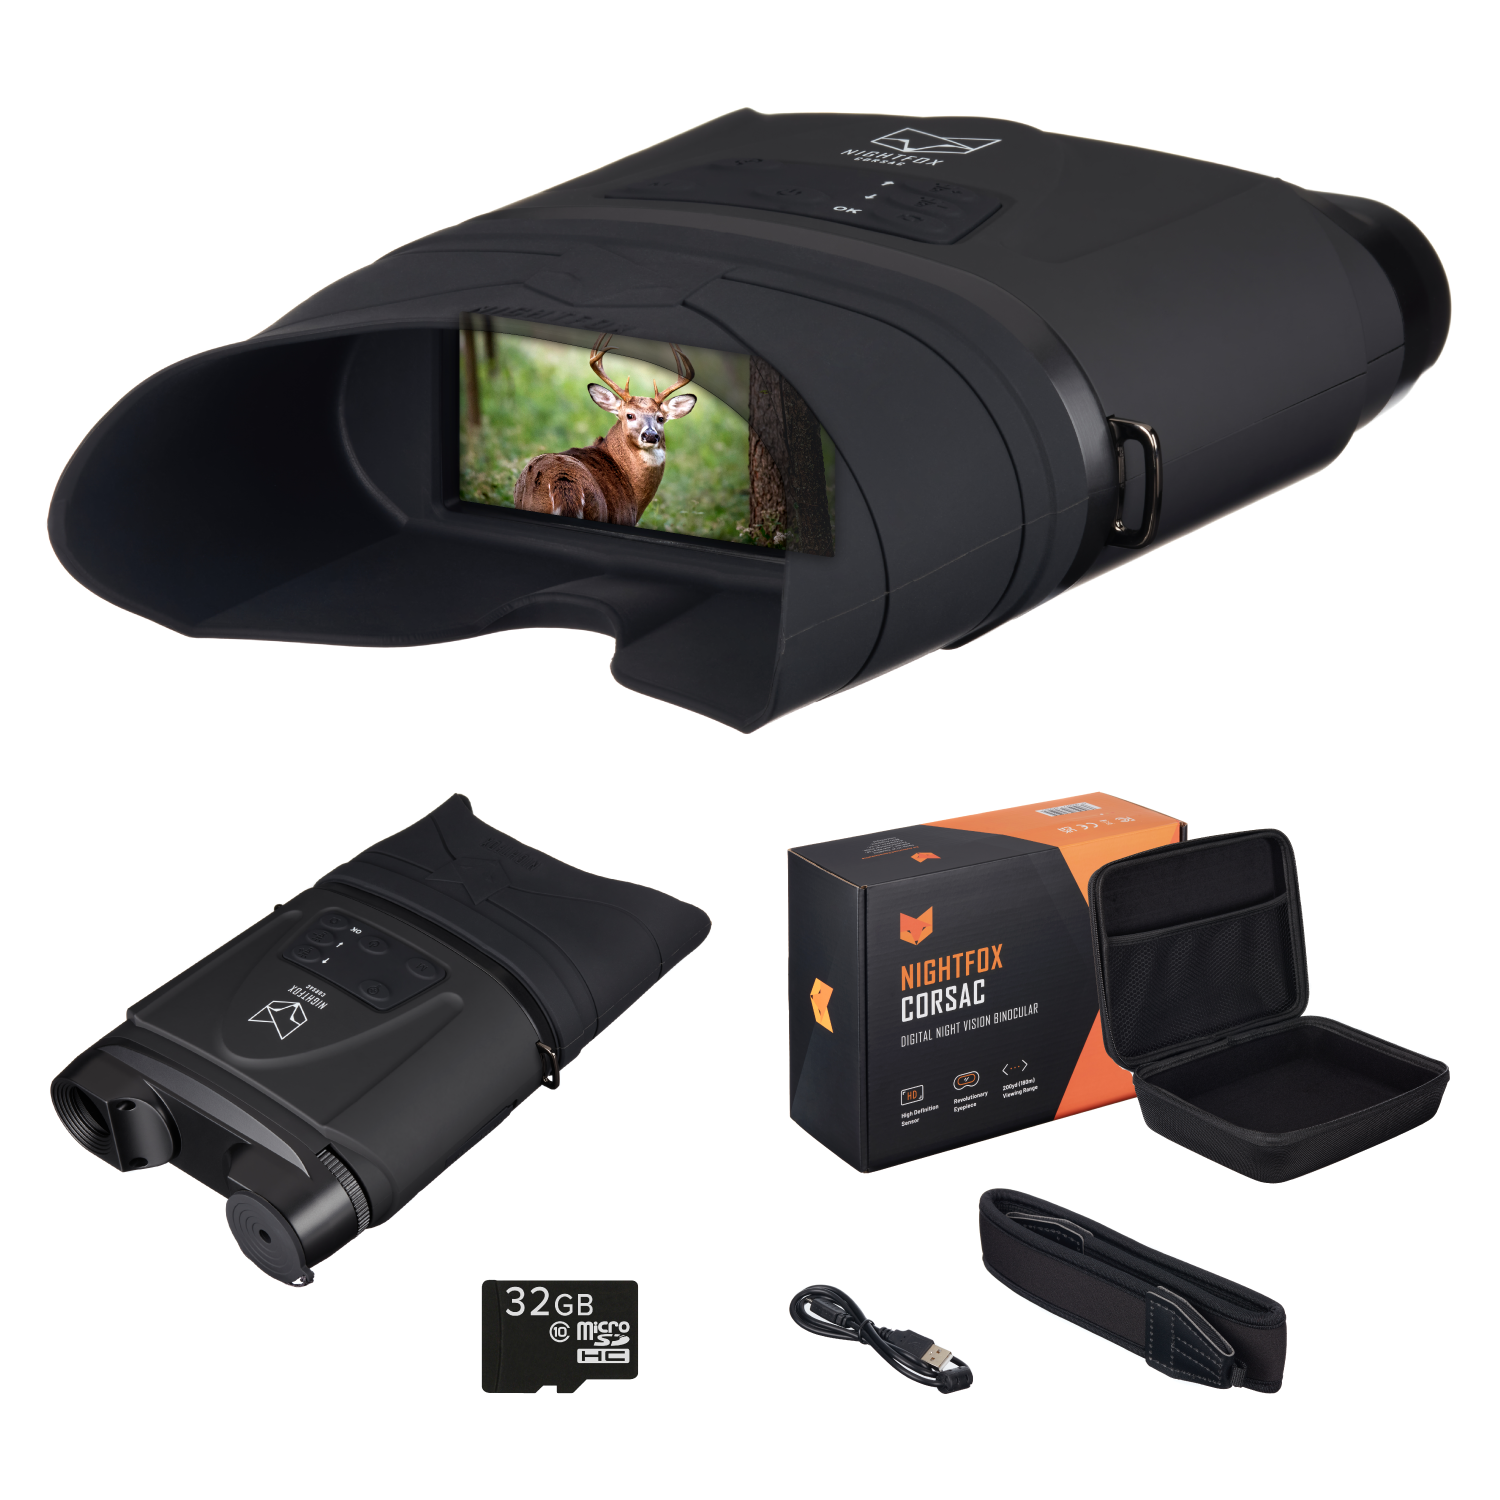 A picture of the Nightfox Corsac HD Night Vision Binocular